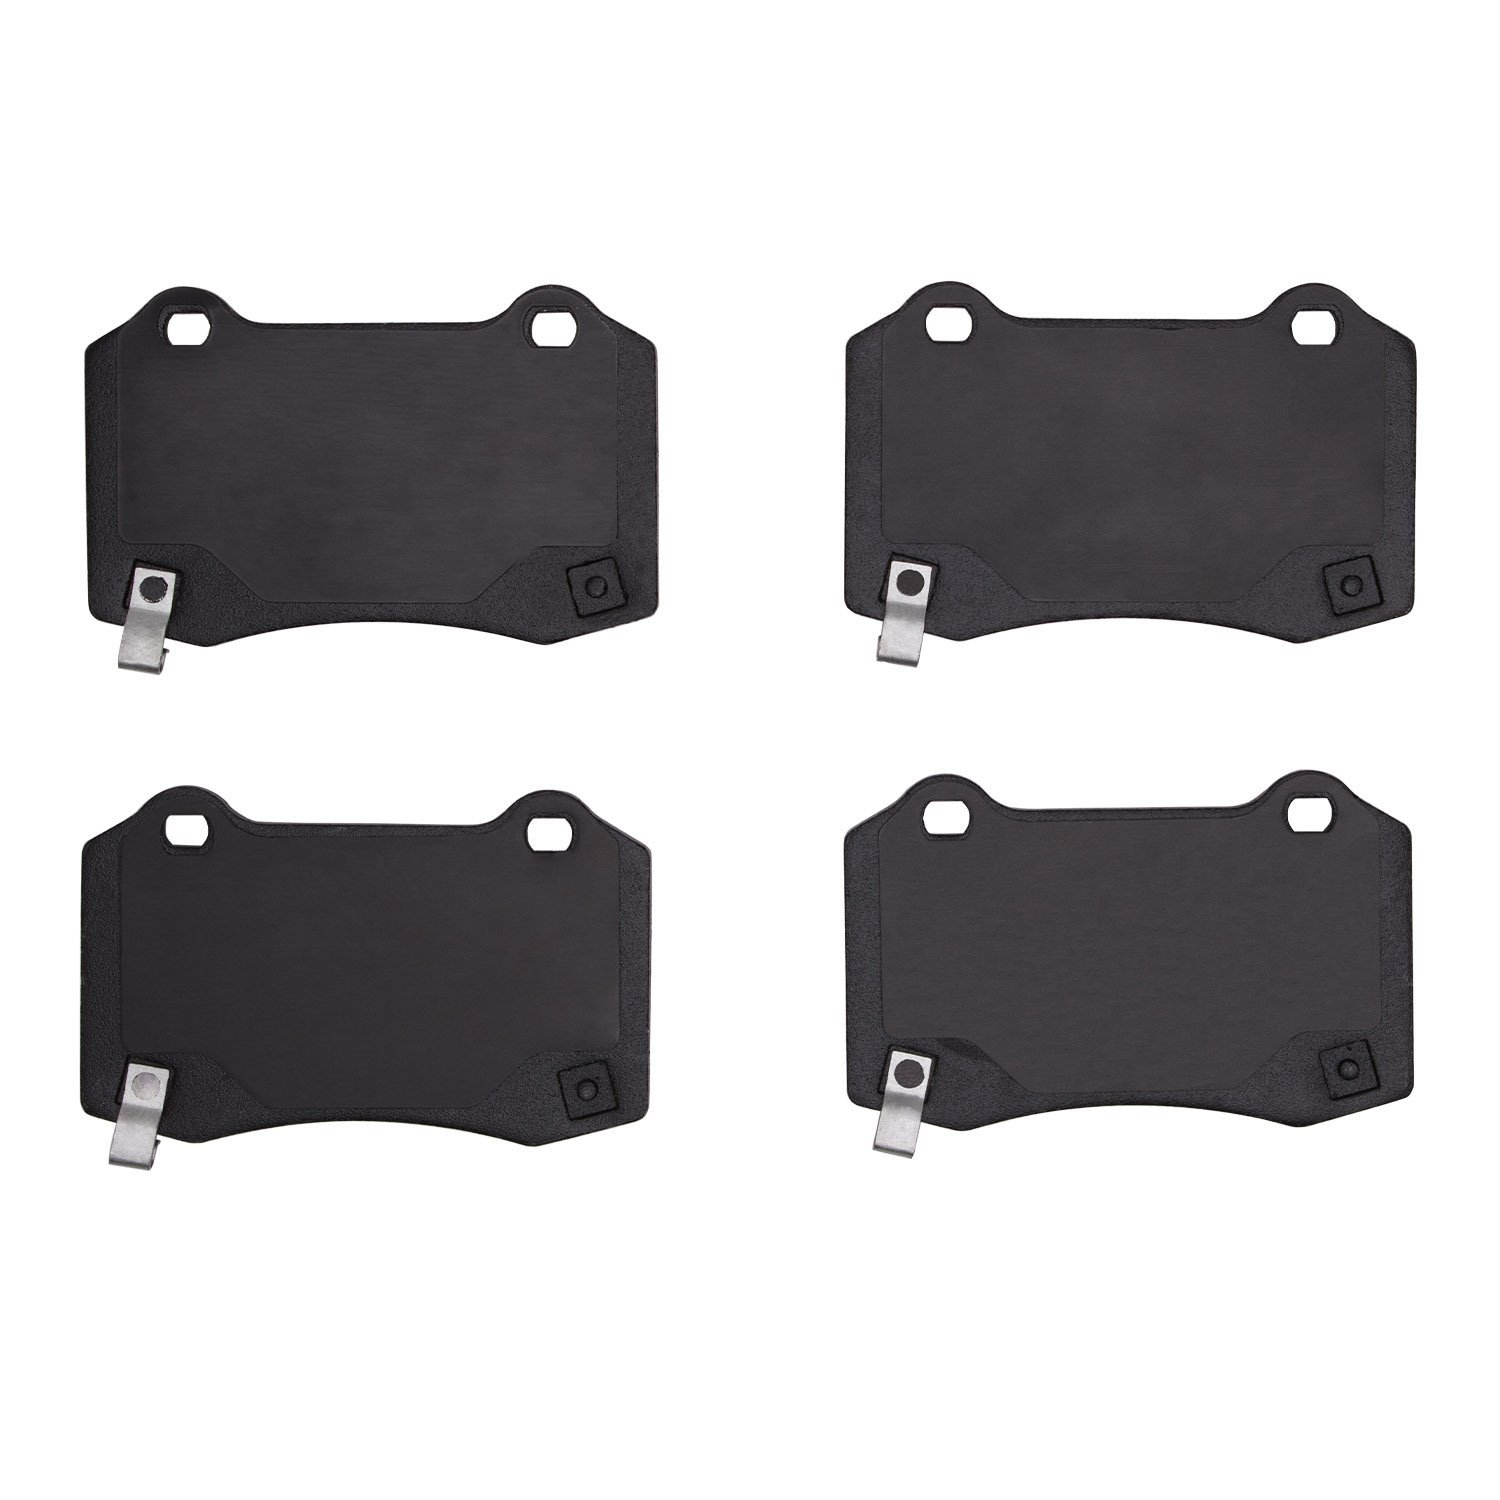 1400-1053-00 Ultimate-Duty Brake Pads Kit, Fits Select Multiple Makes/Models, Position: Rear